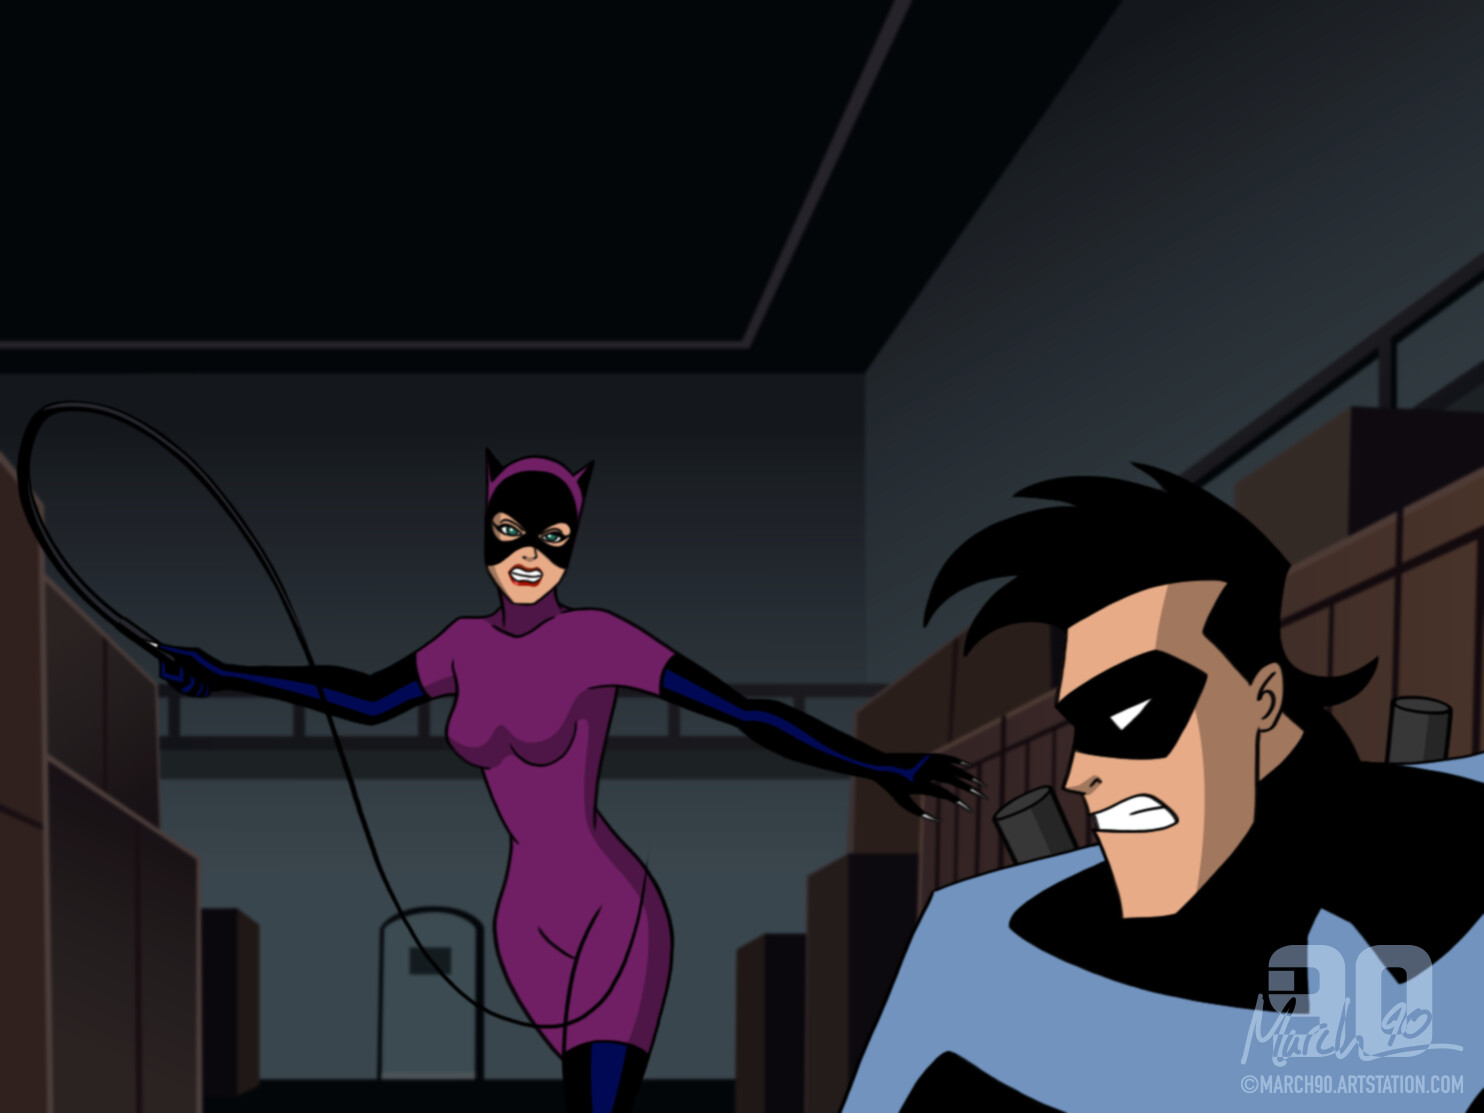 ArtStation - Catwoman vs Nightwing